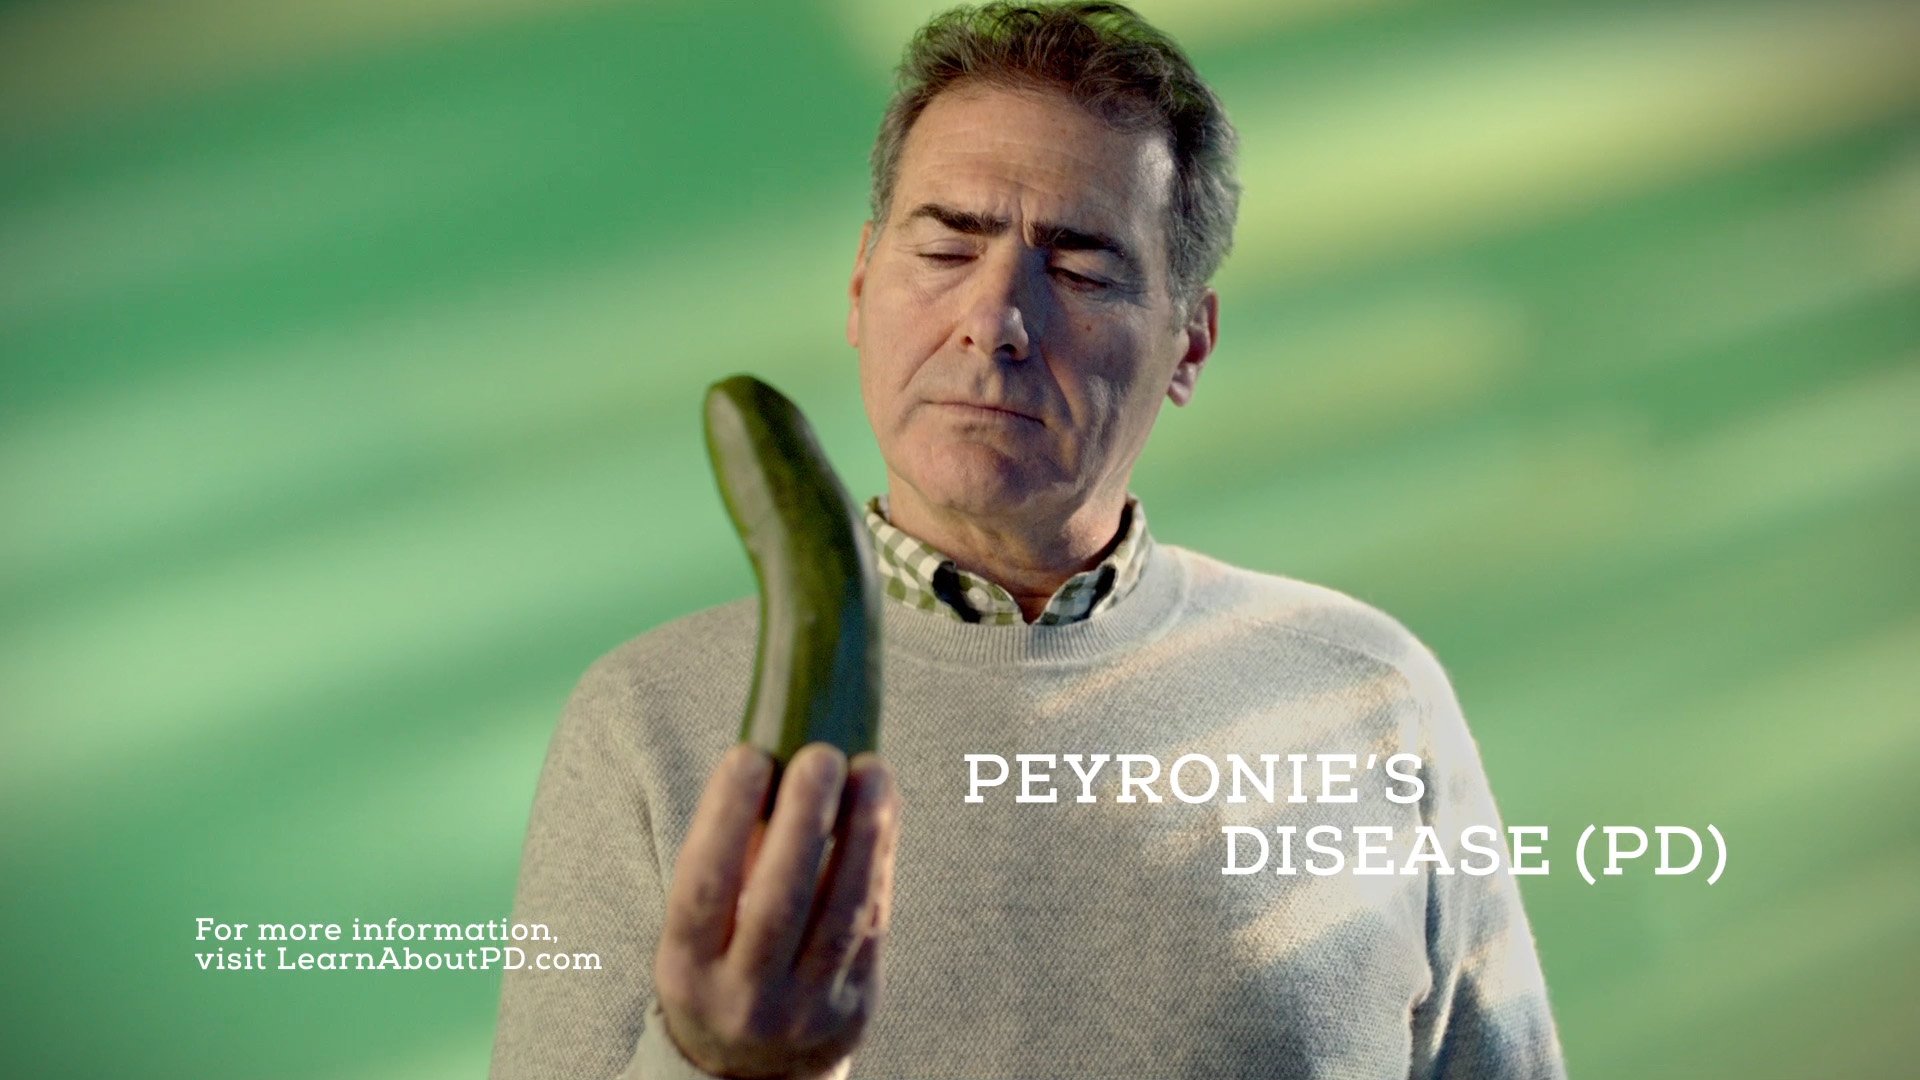 Endo TV ad still for Peyronies disease awareness